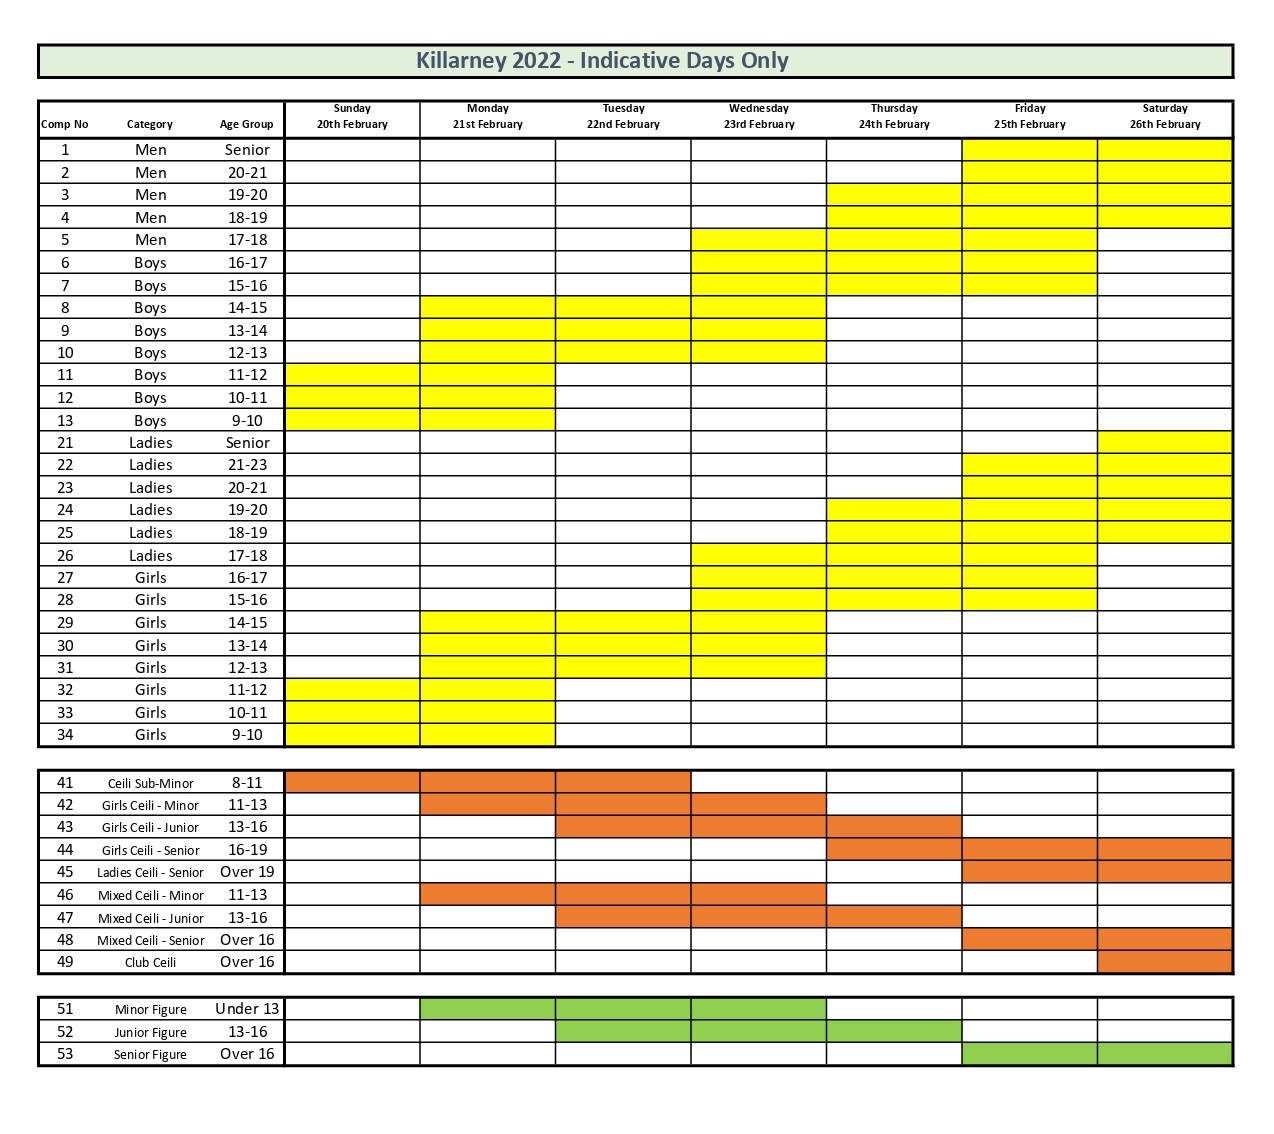 Corrected Indicative Days Timetable All ireland 2022